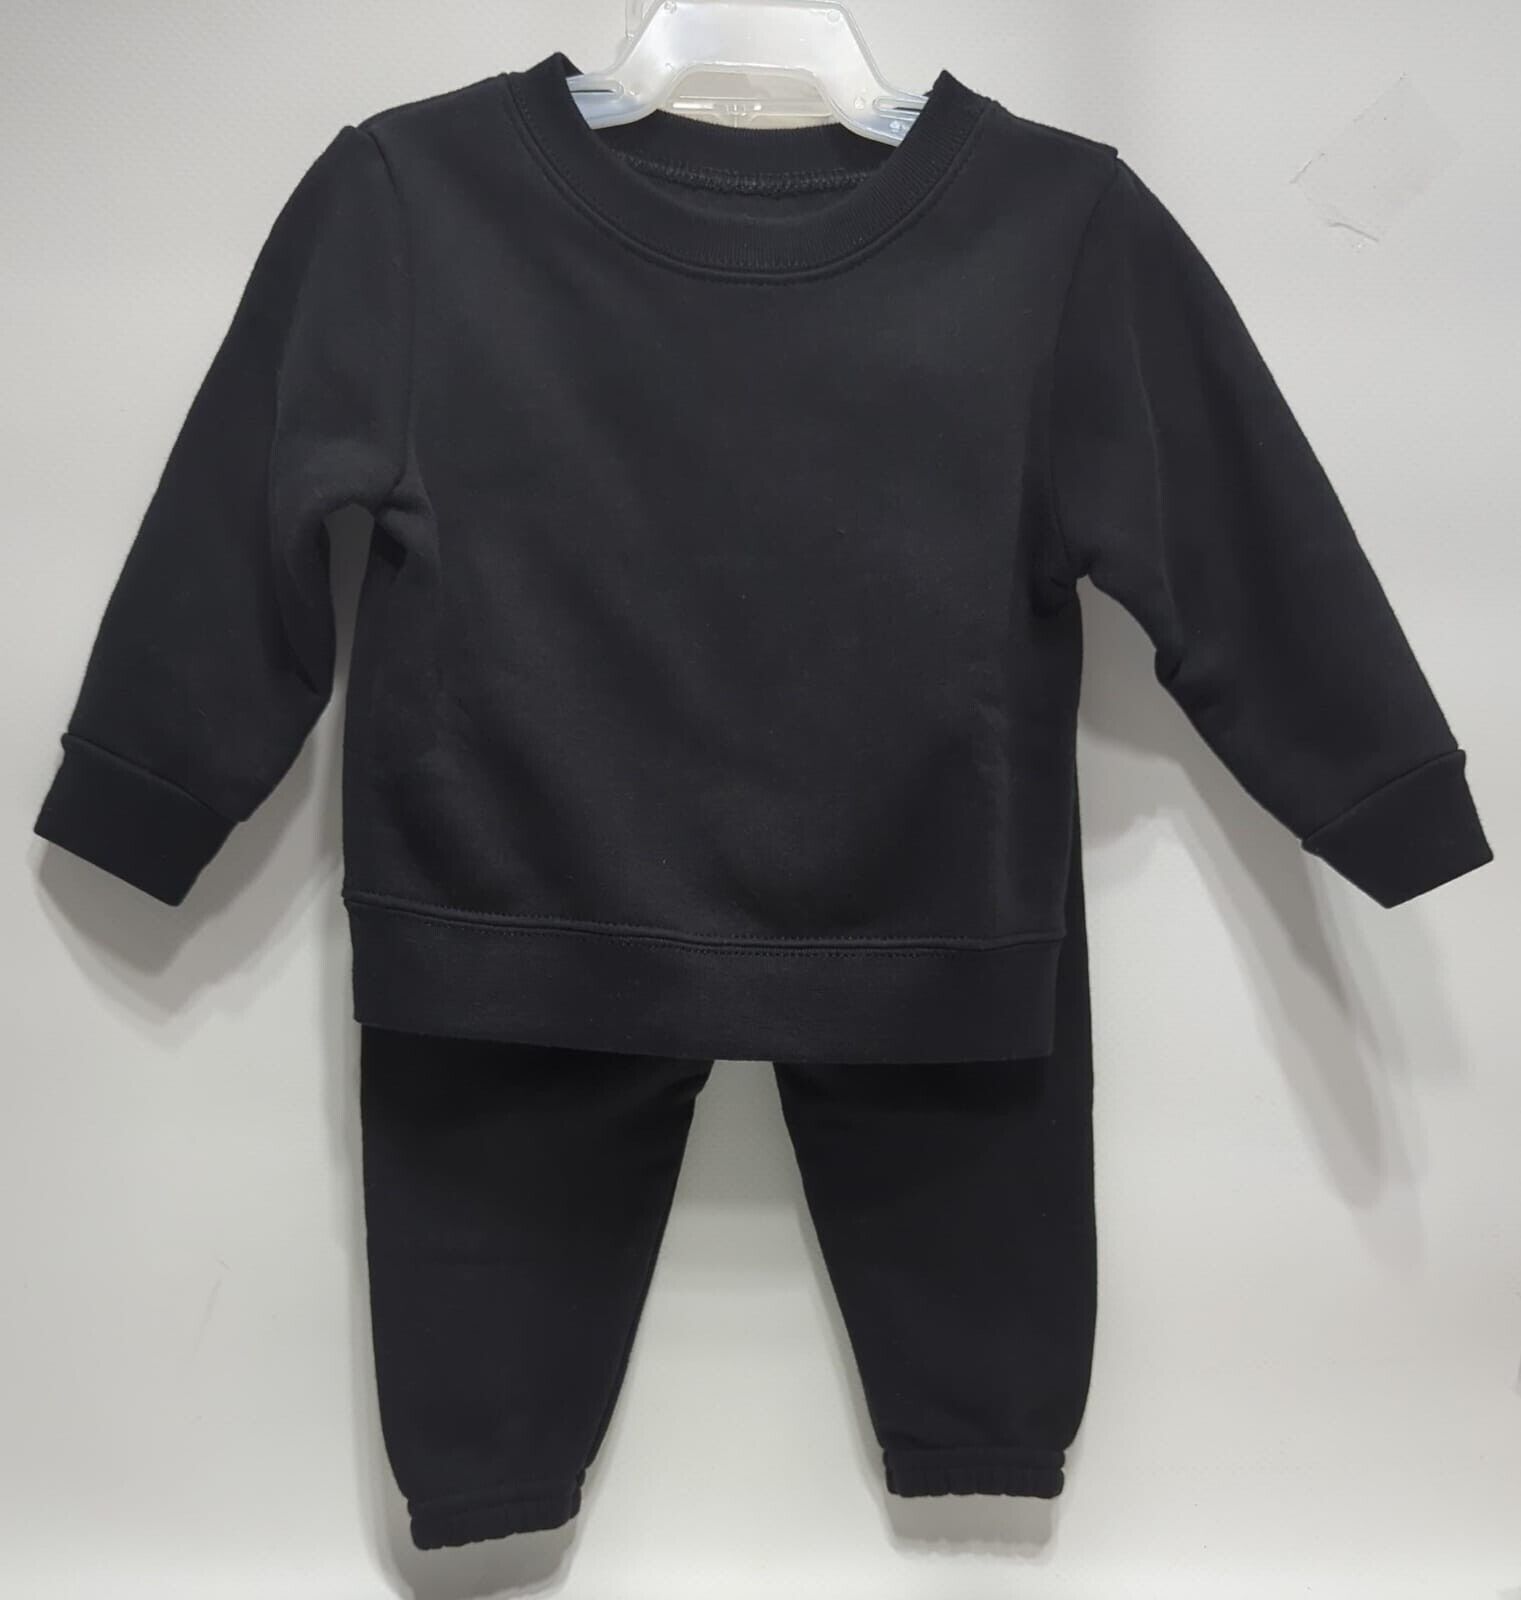 Primary image for Garanimals Toddler Boy 2 Piece Fleece Top & Jogger Pant Set, Black Size 18M